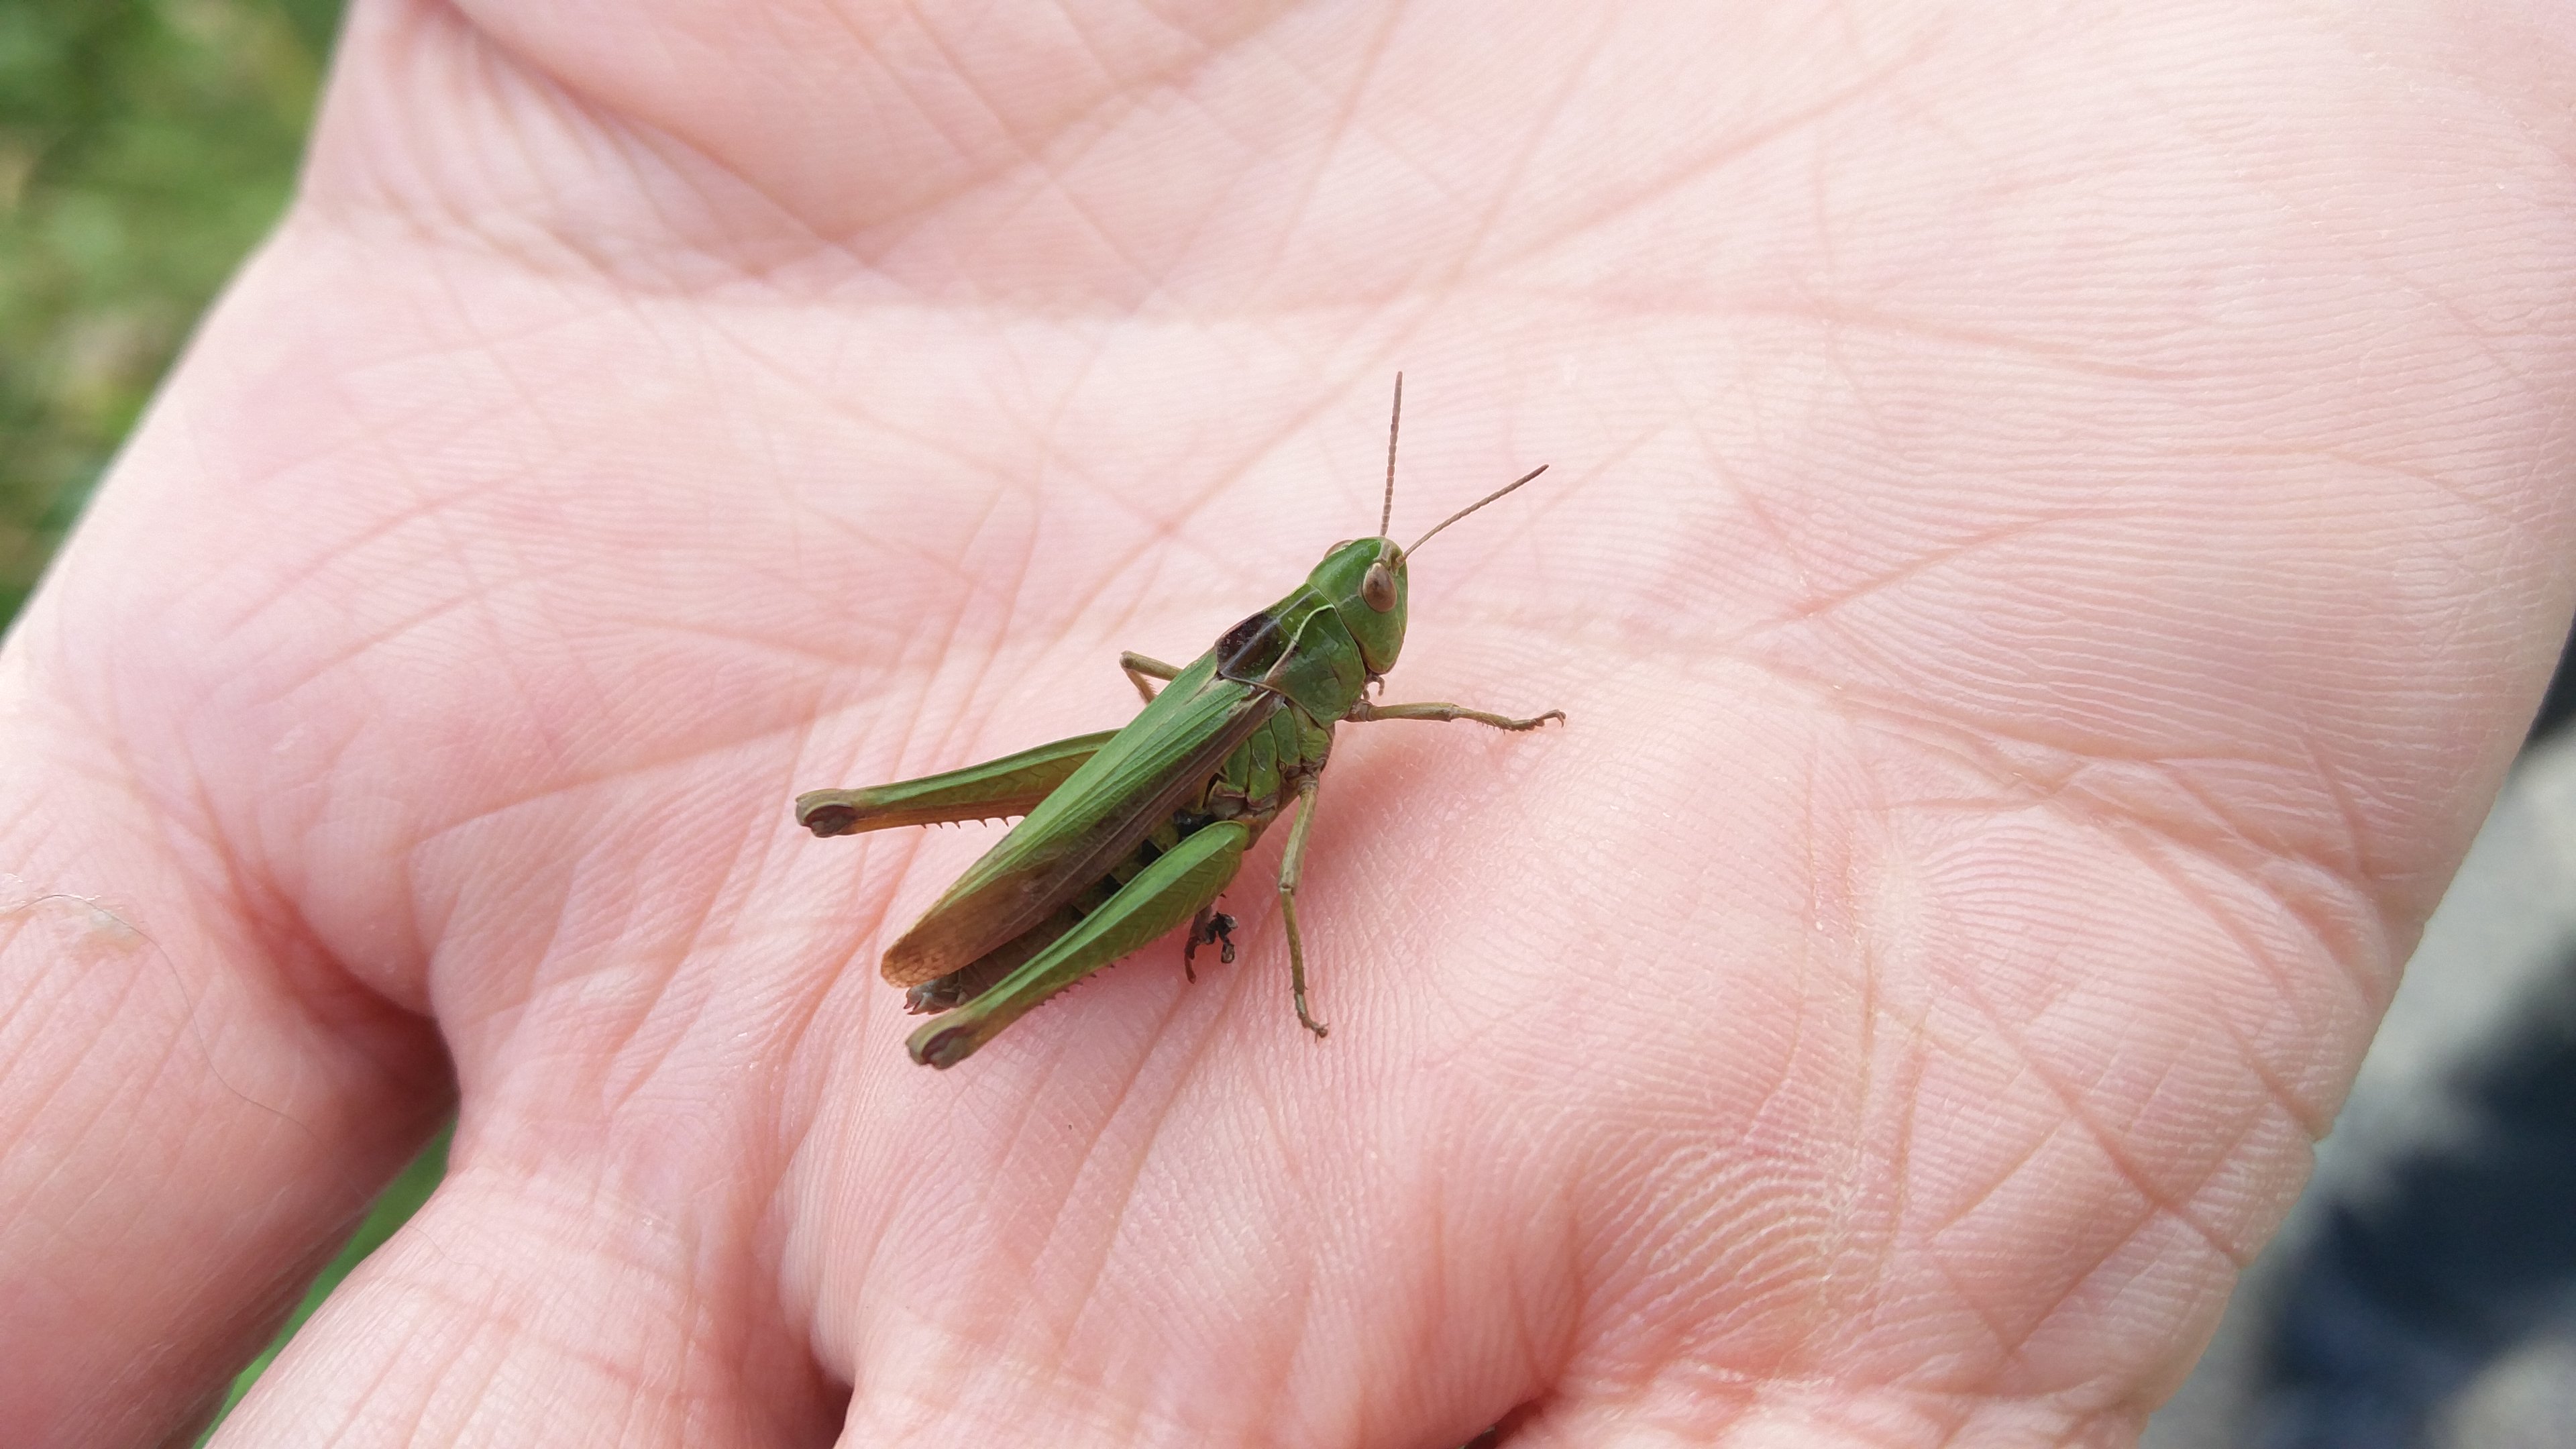 #5 - Grasshopper Mating Calls